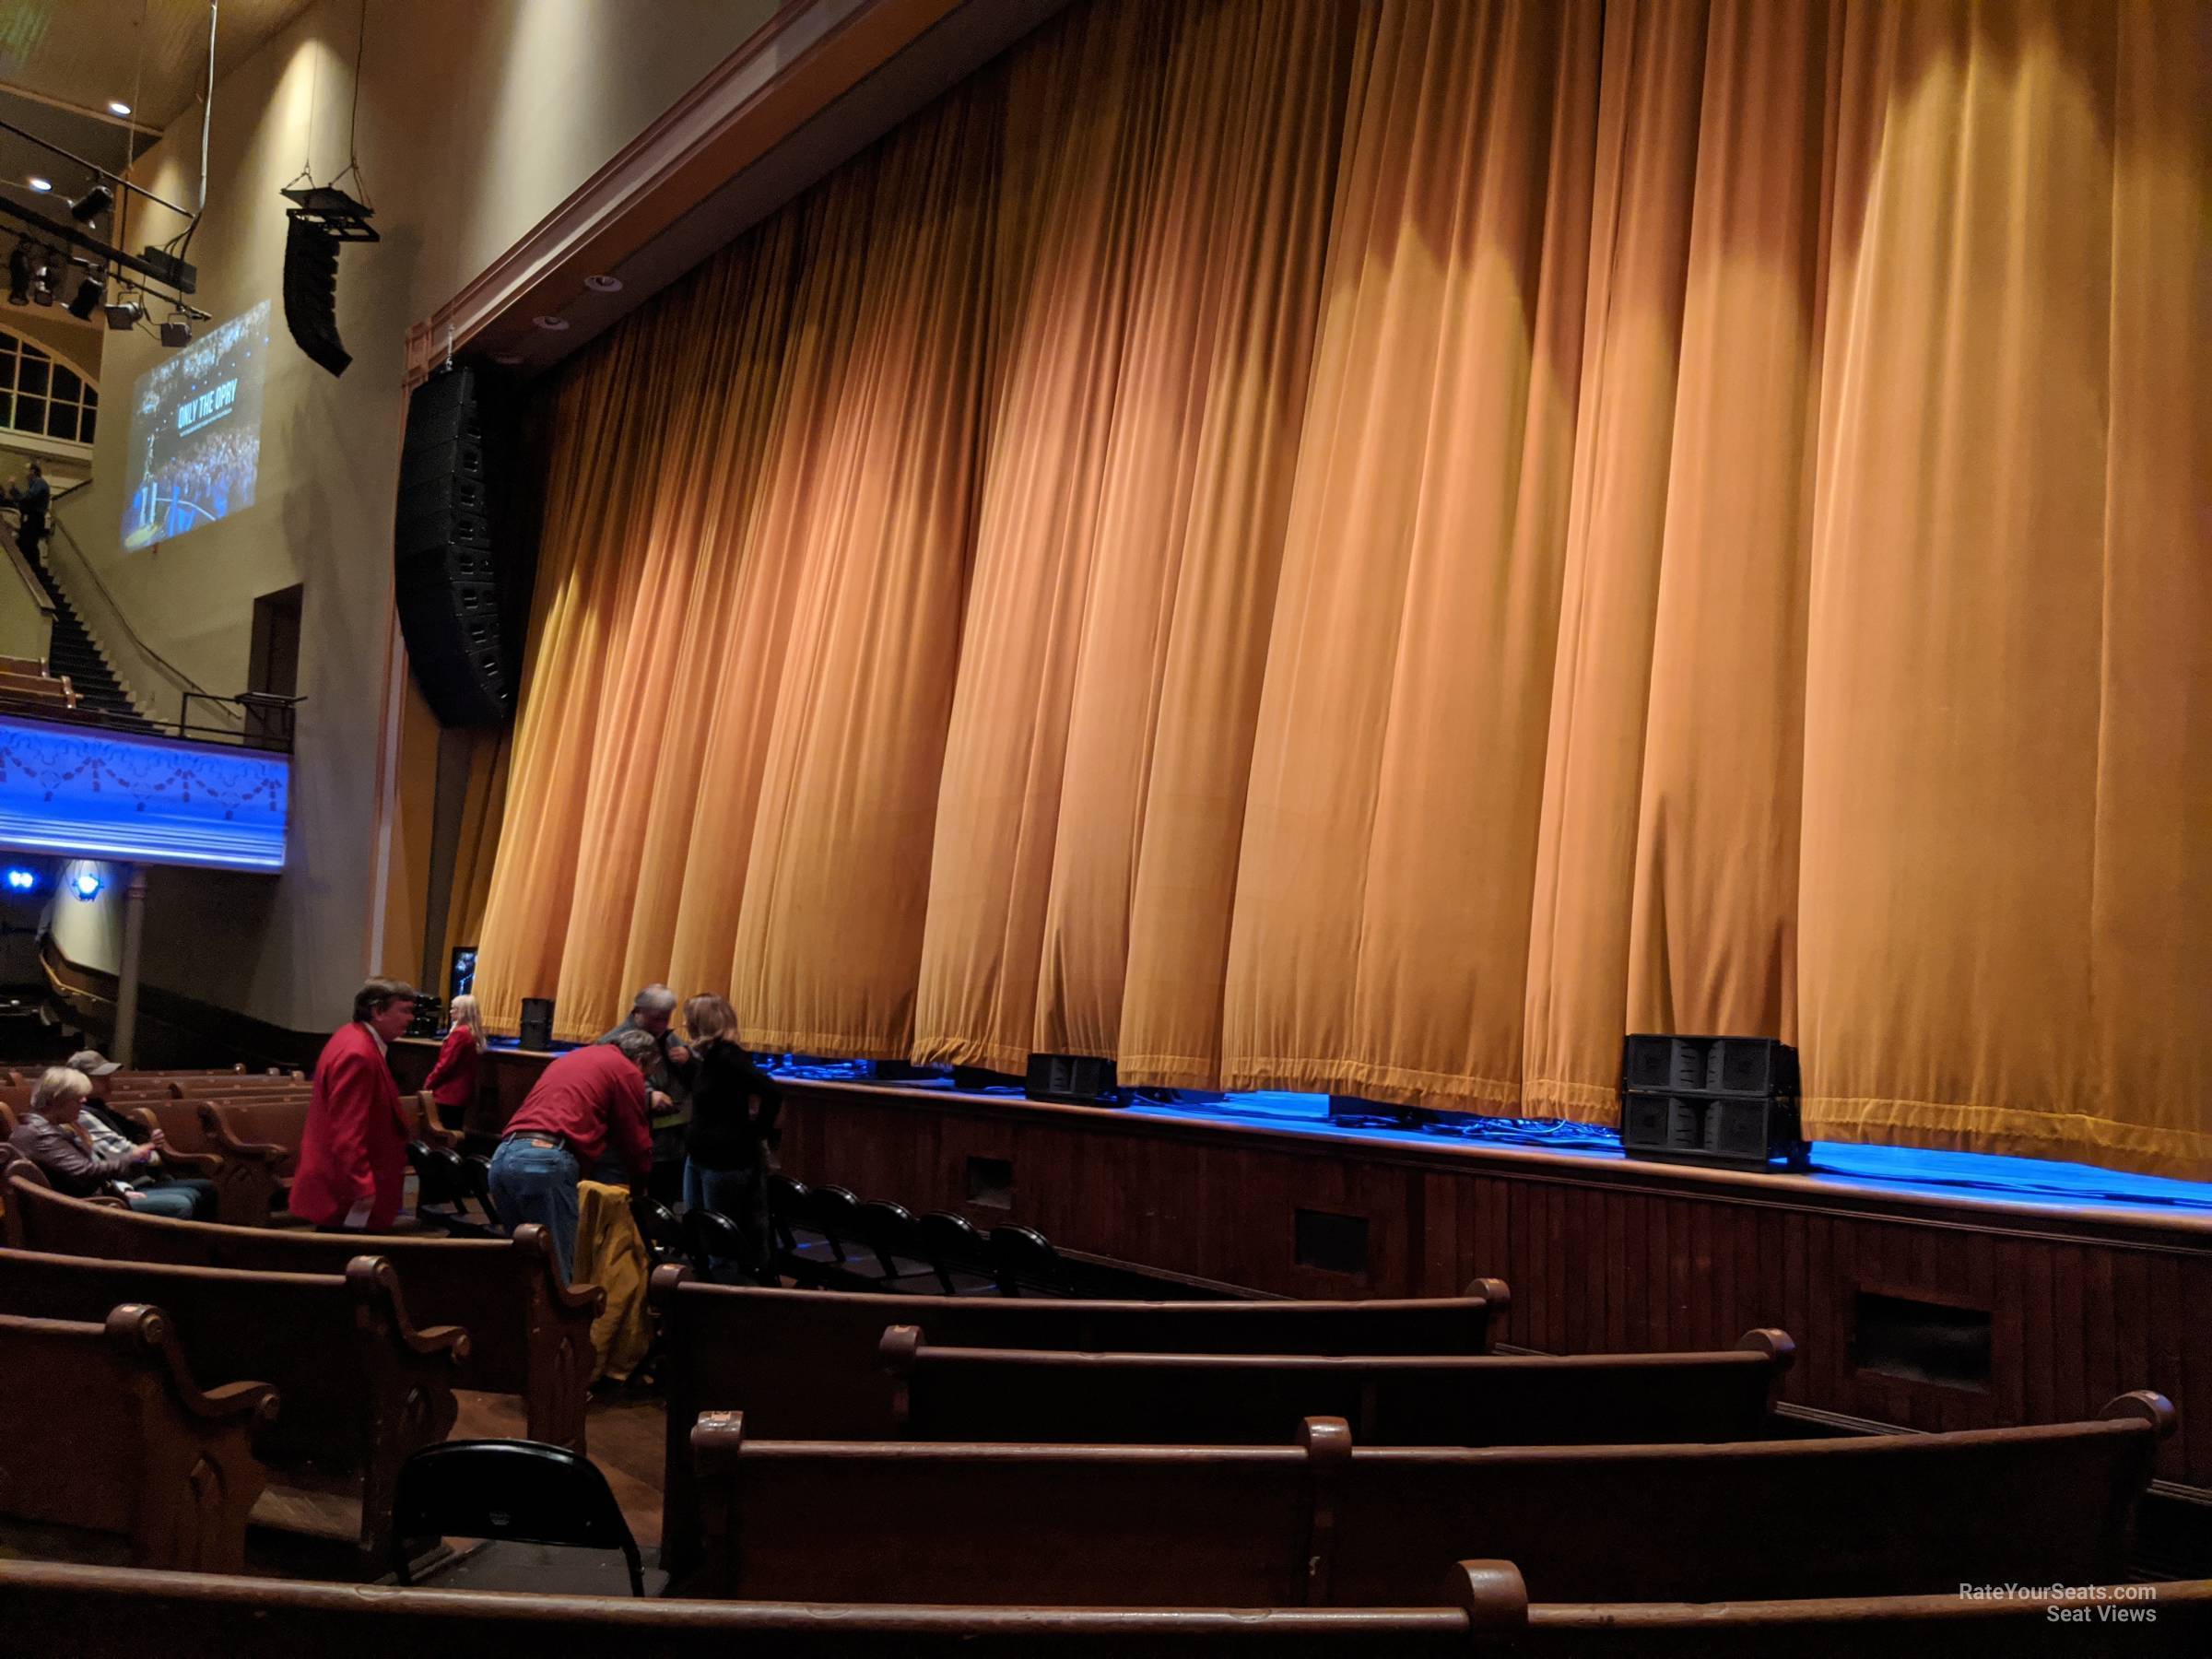 Section 1 at Ryman Auditorium